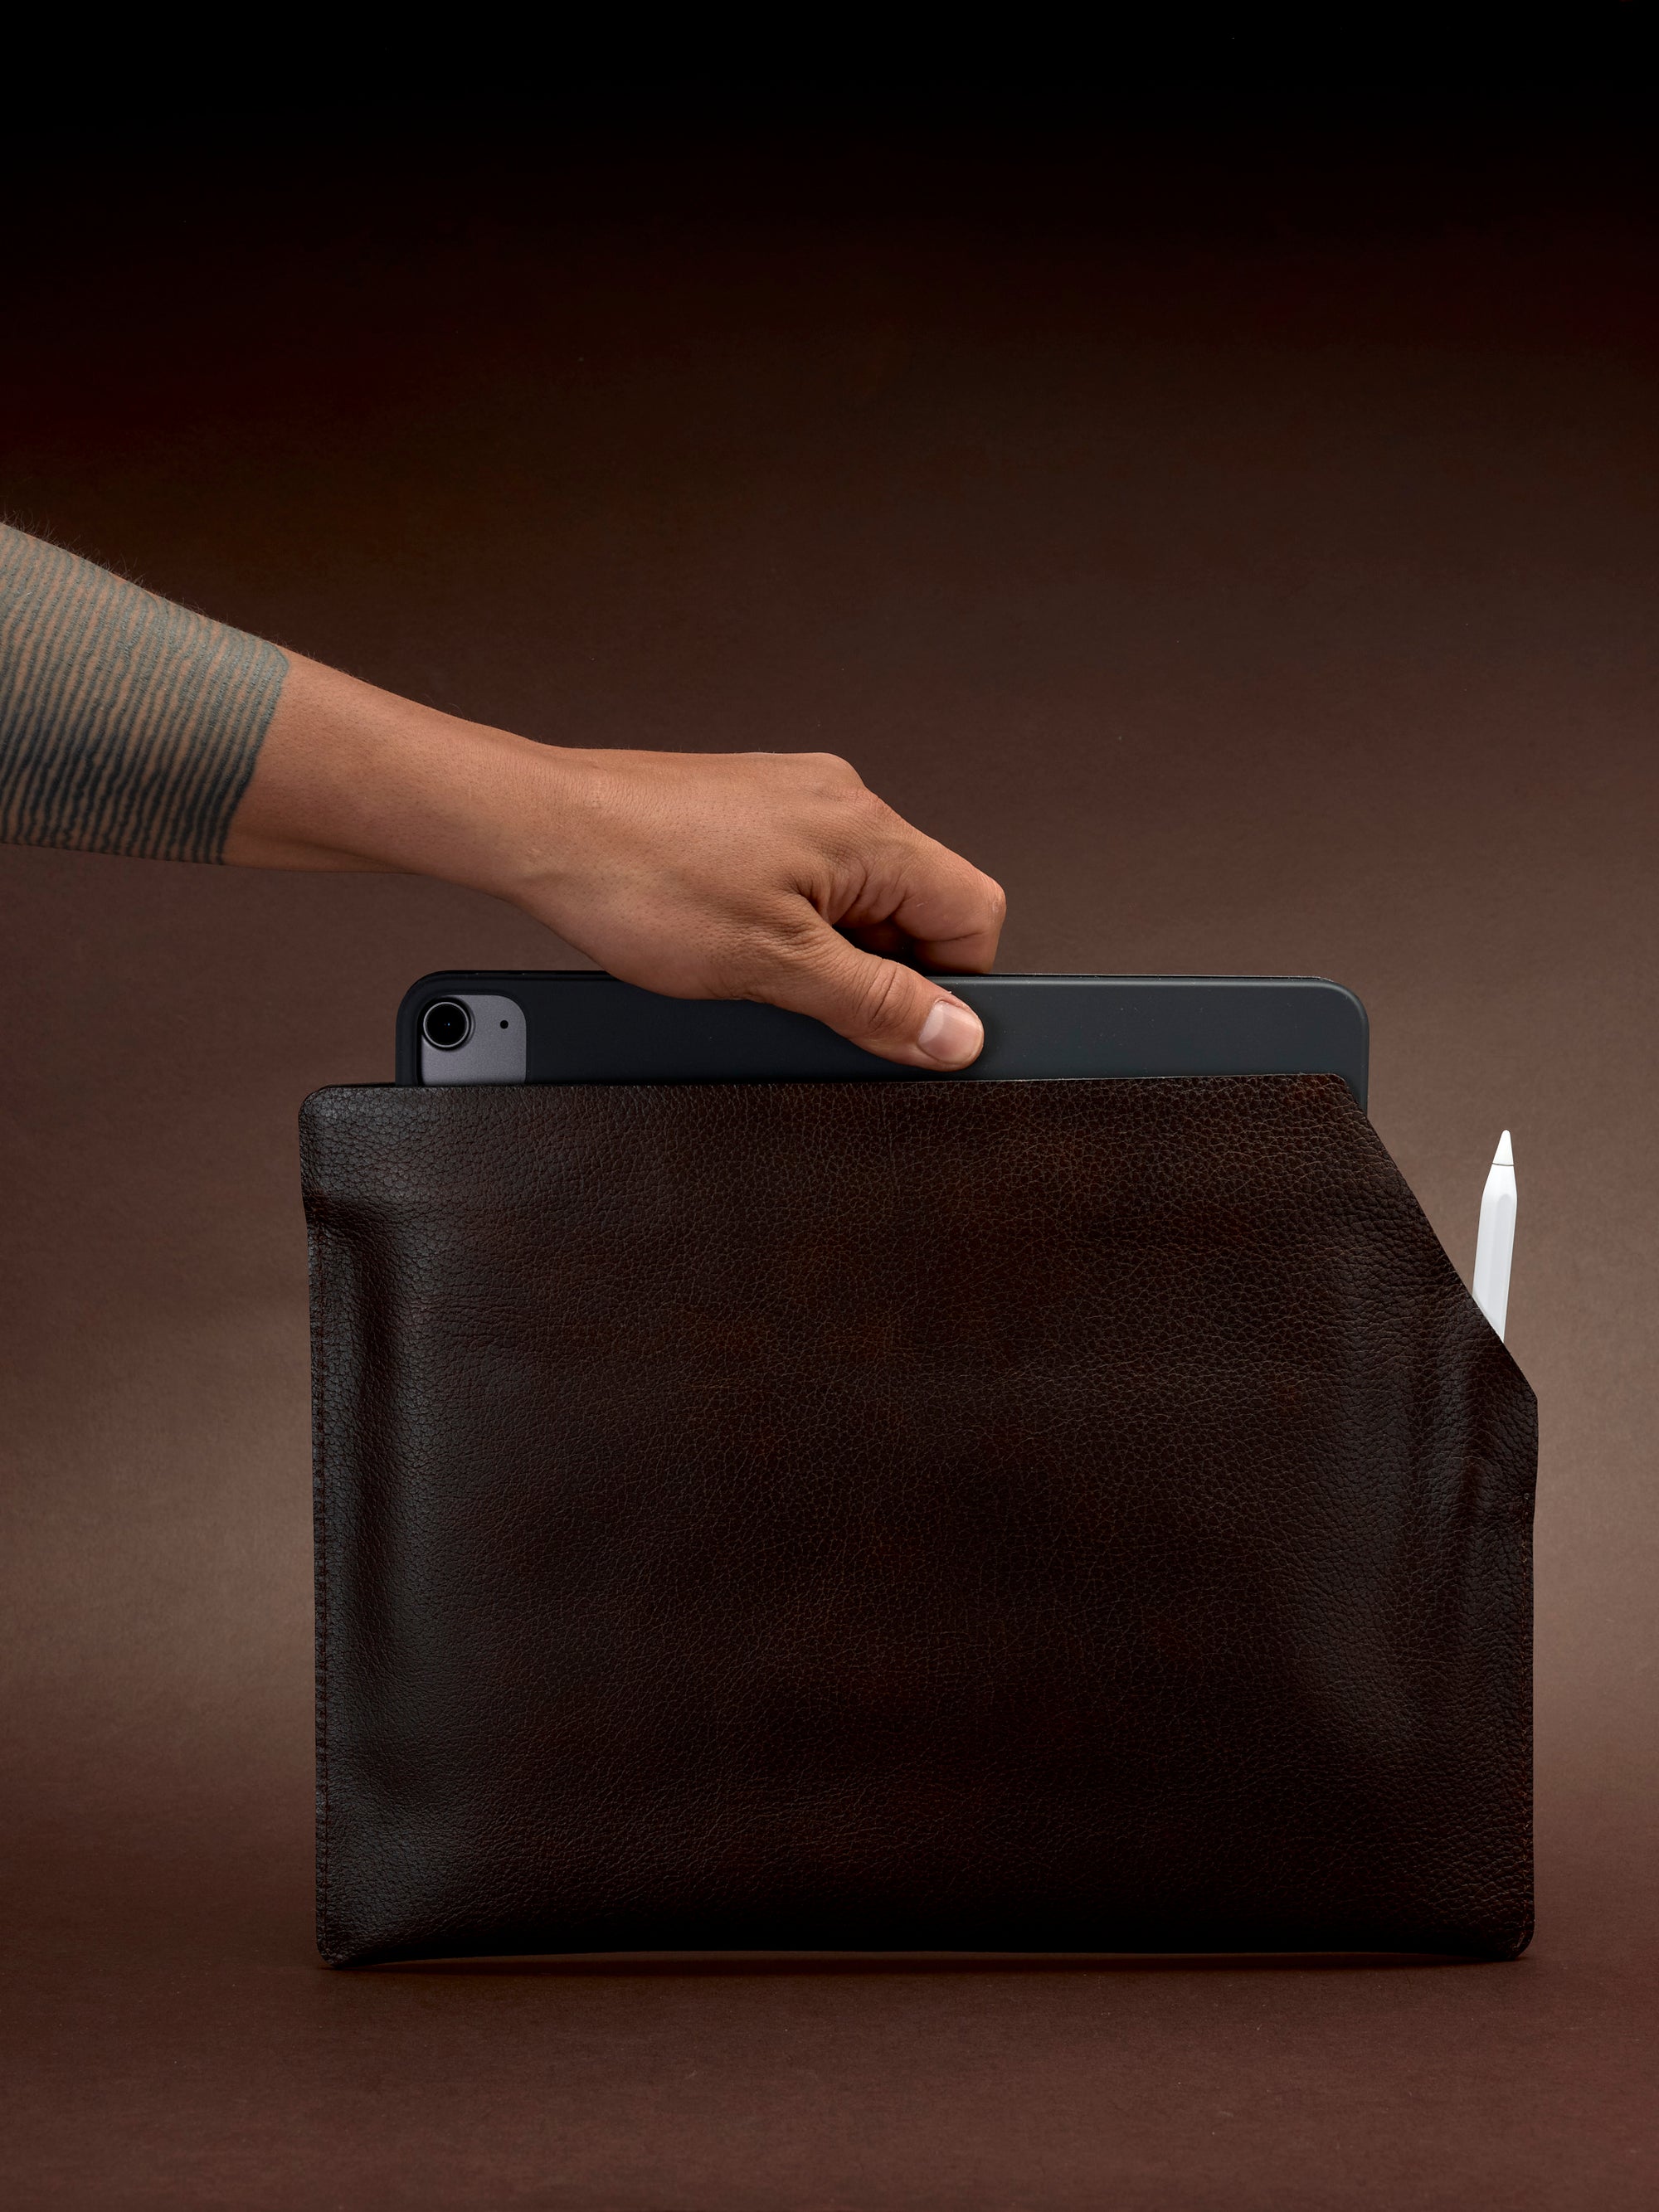 Draftsman 6 iPad Case Sleeve · Tan by Capra Leather